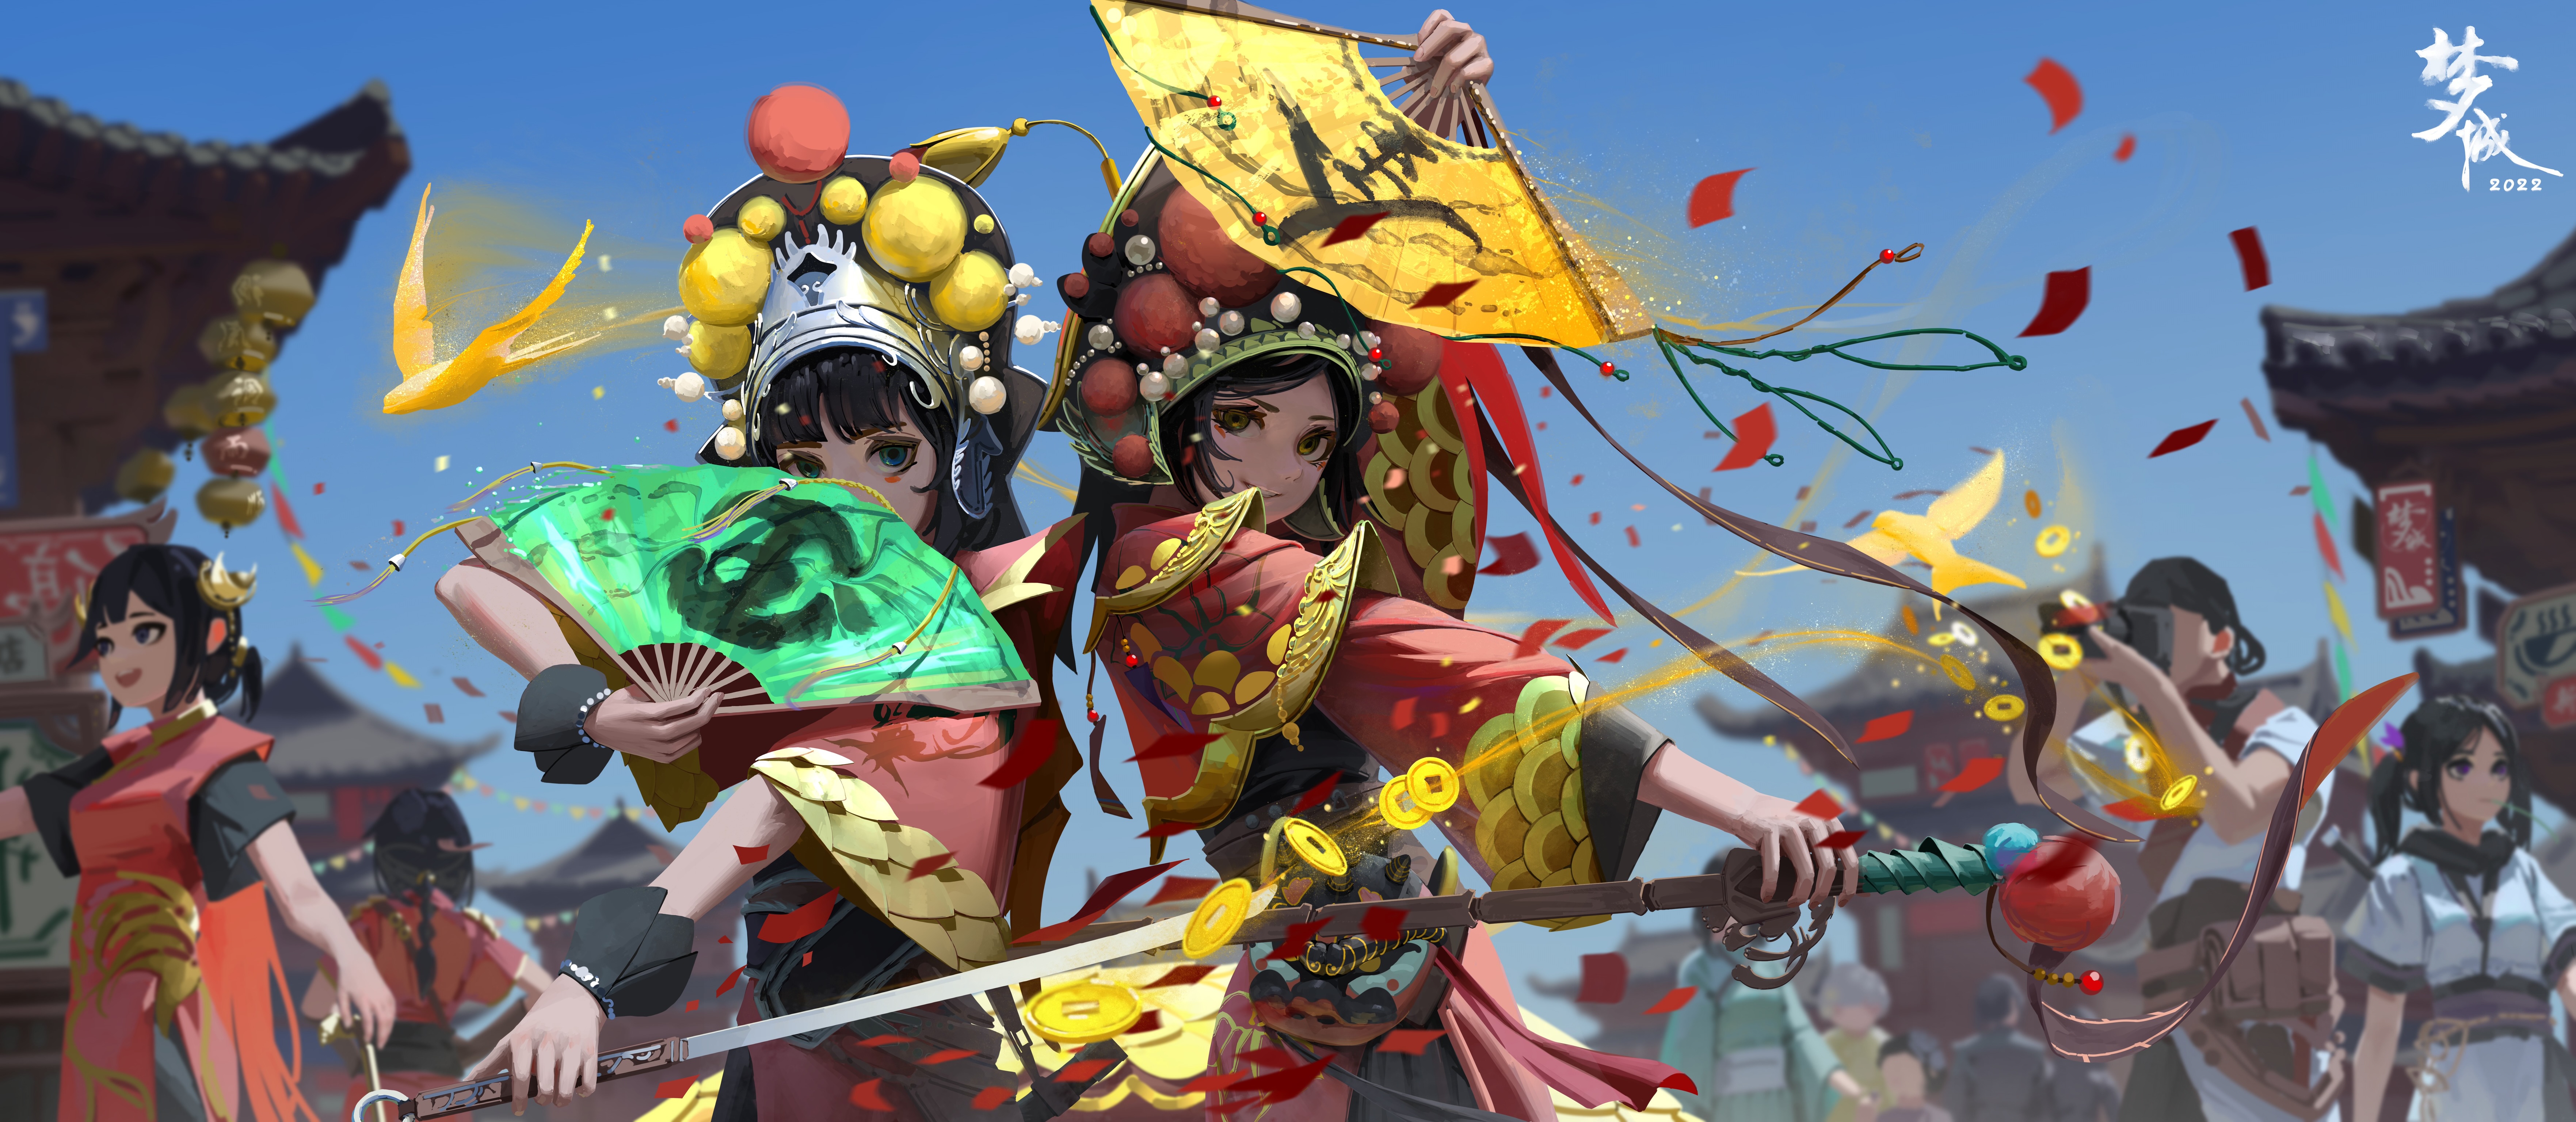 Beijing Opera Fans Anime Anime Girls Women With Swords Two Women Petals 7052x3072